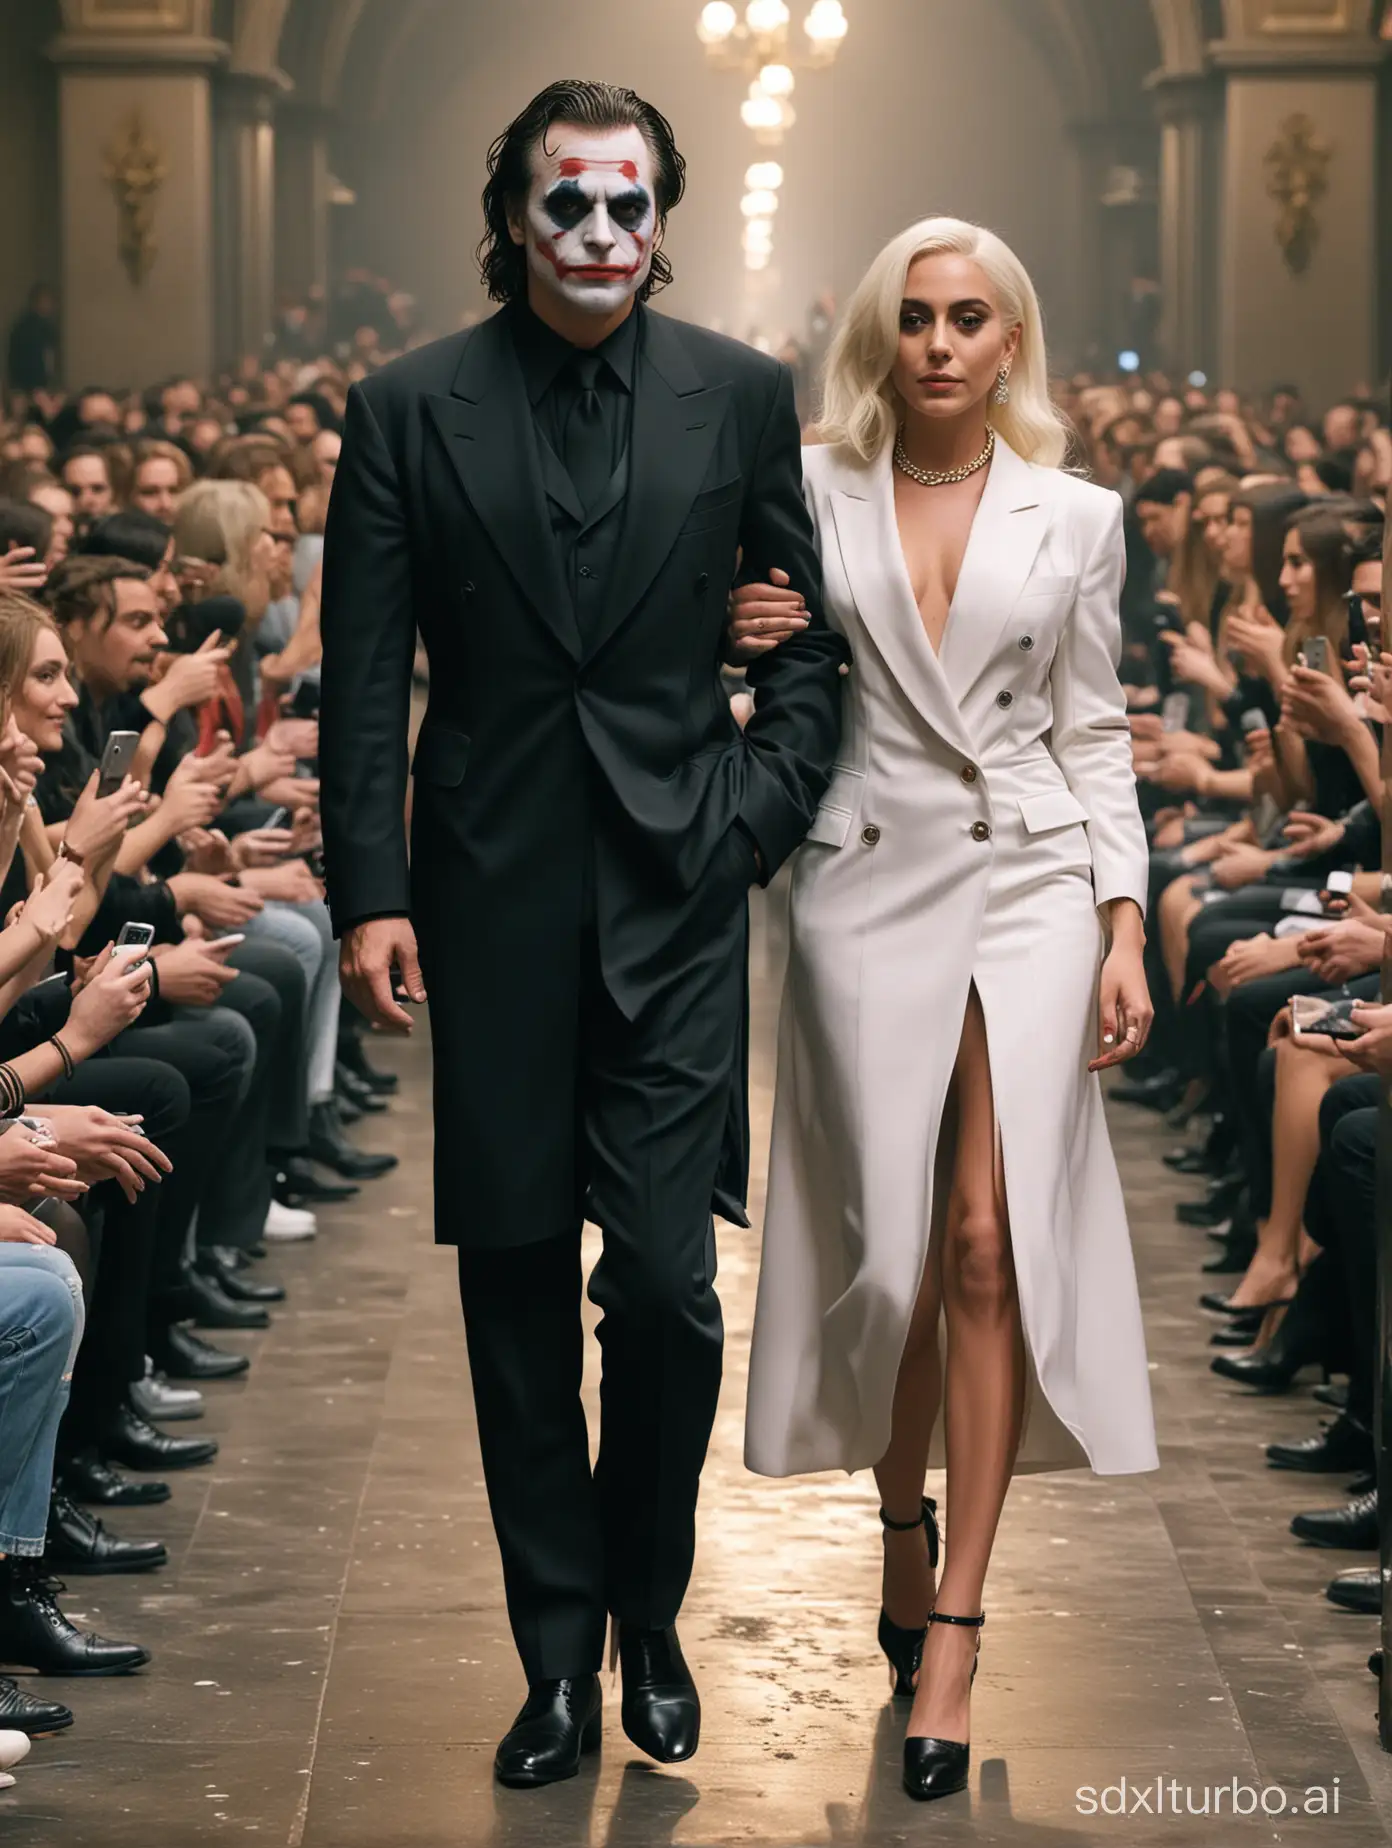 Joker-and-Lady-Gaga-Strut-Eccentric-Fashion-on-Paris-Collection-Runway